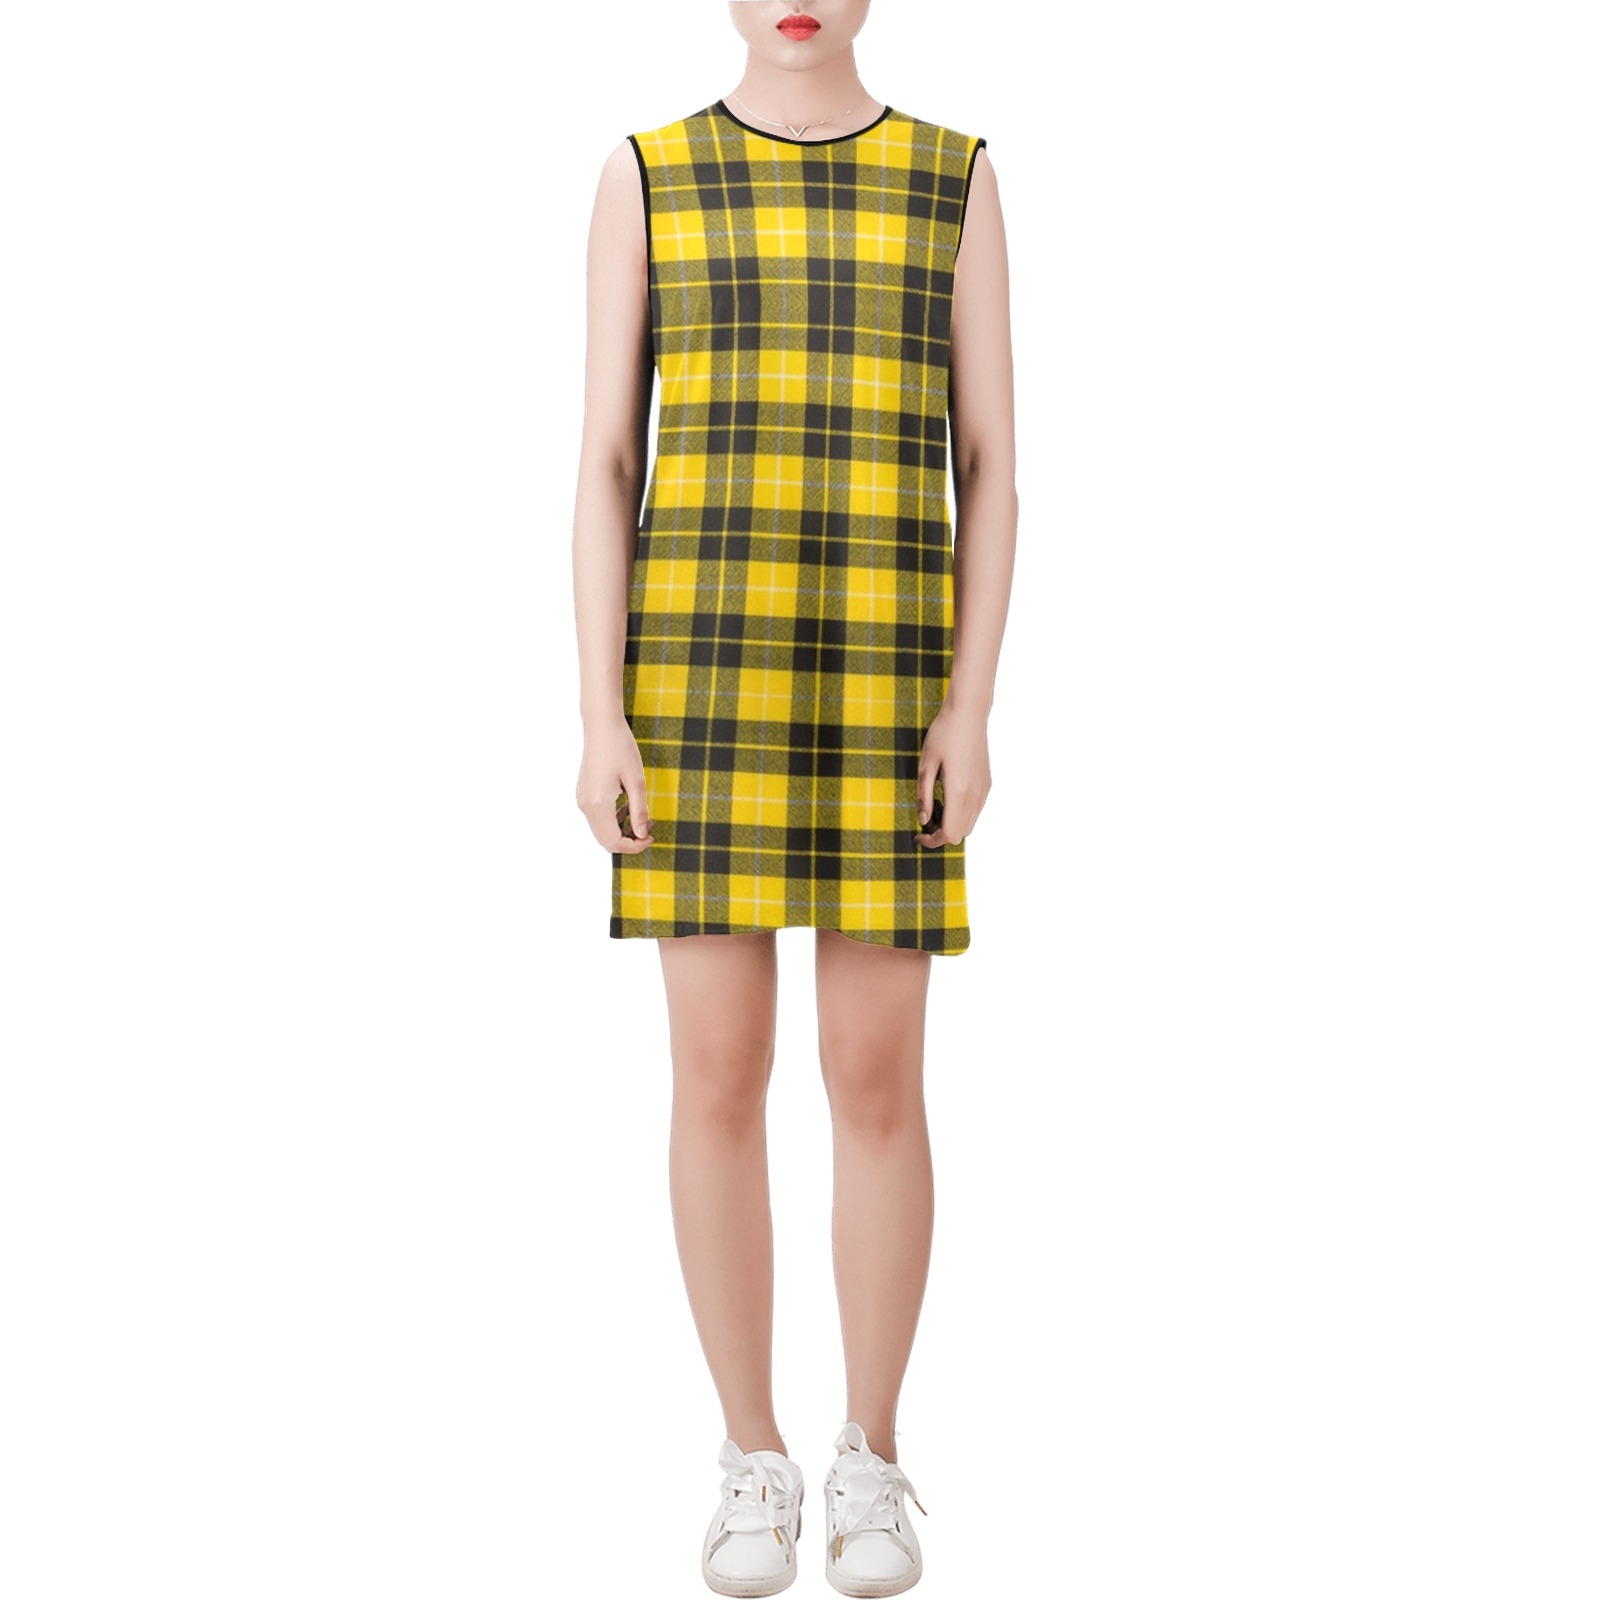 Barclay Dress Modern Sleeveless Round Neck Shift Dress (Model D51)